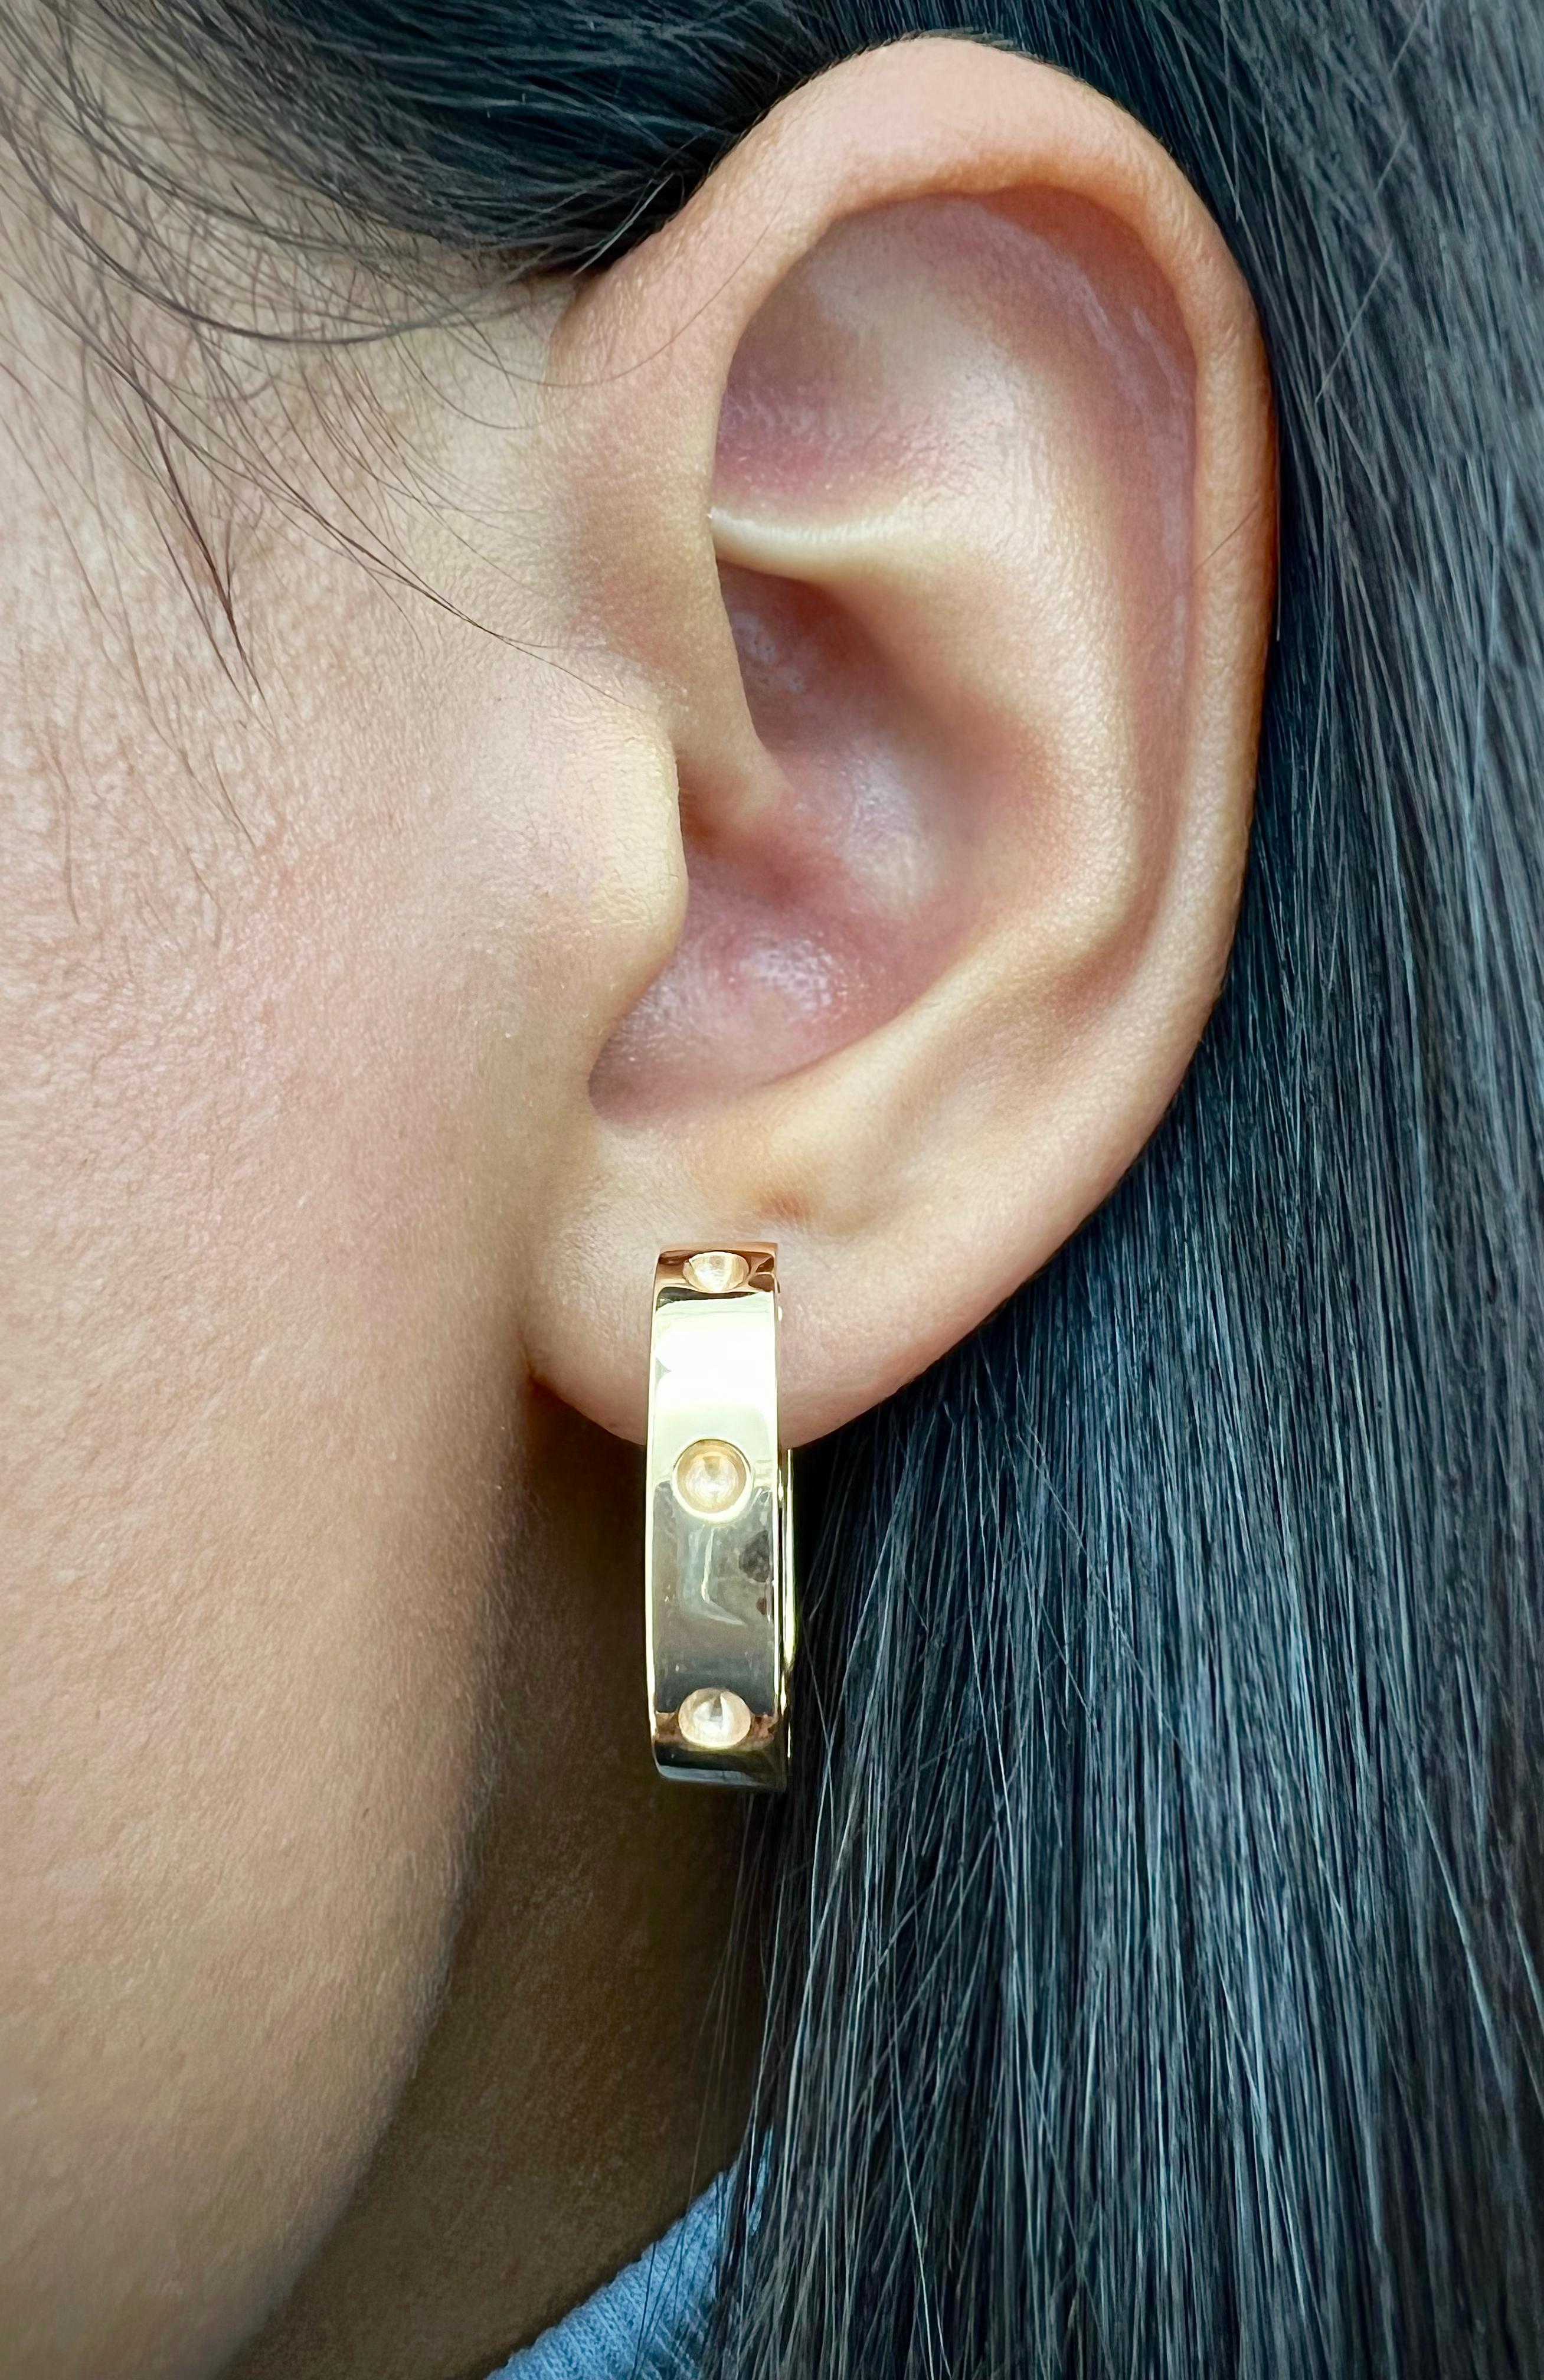 roberto coin earrings